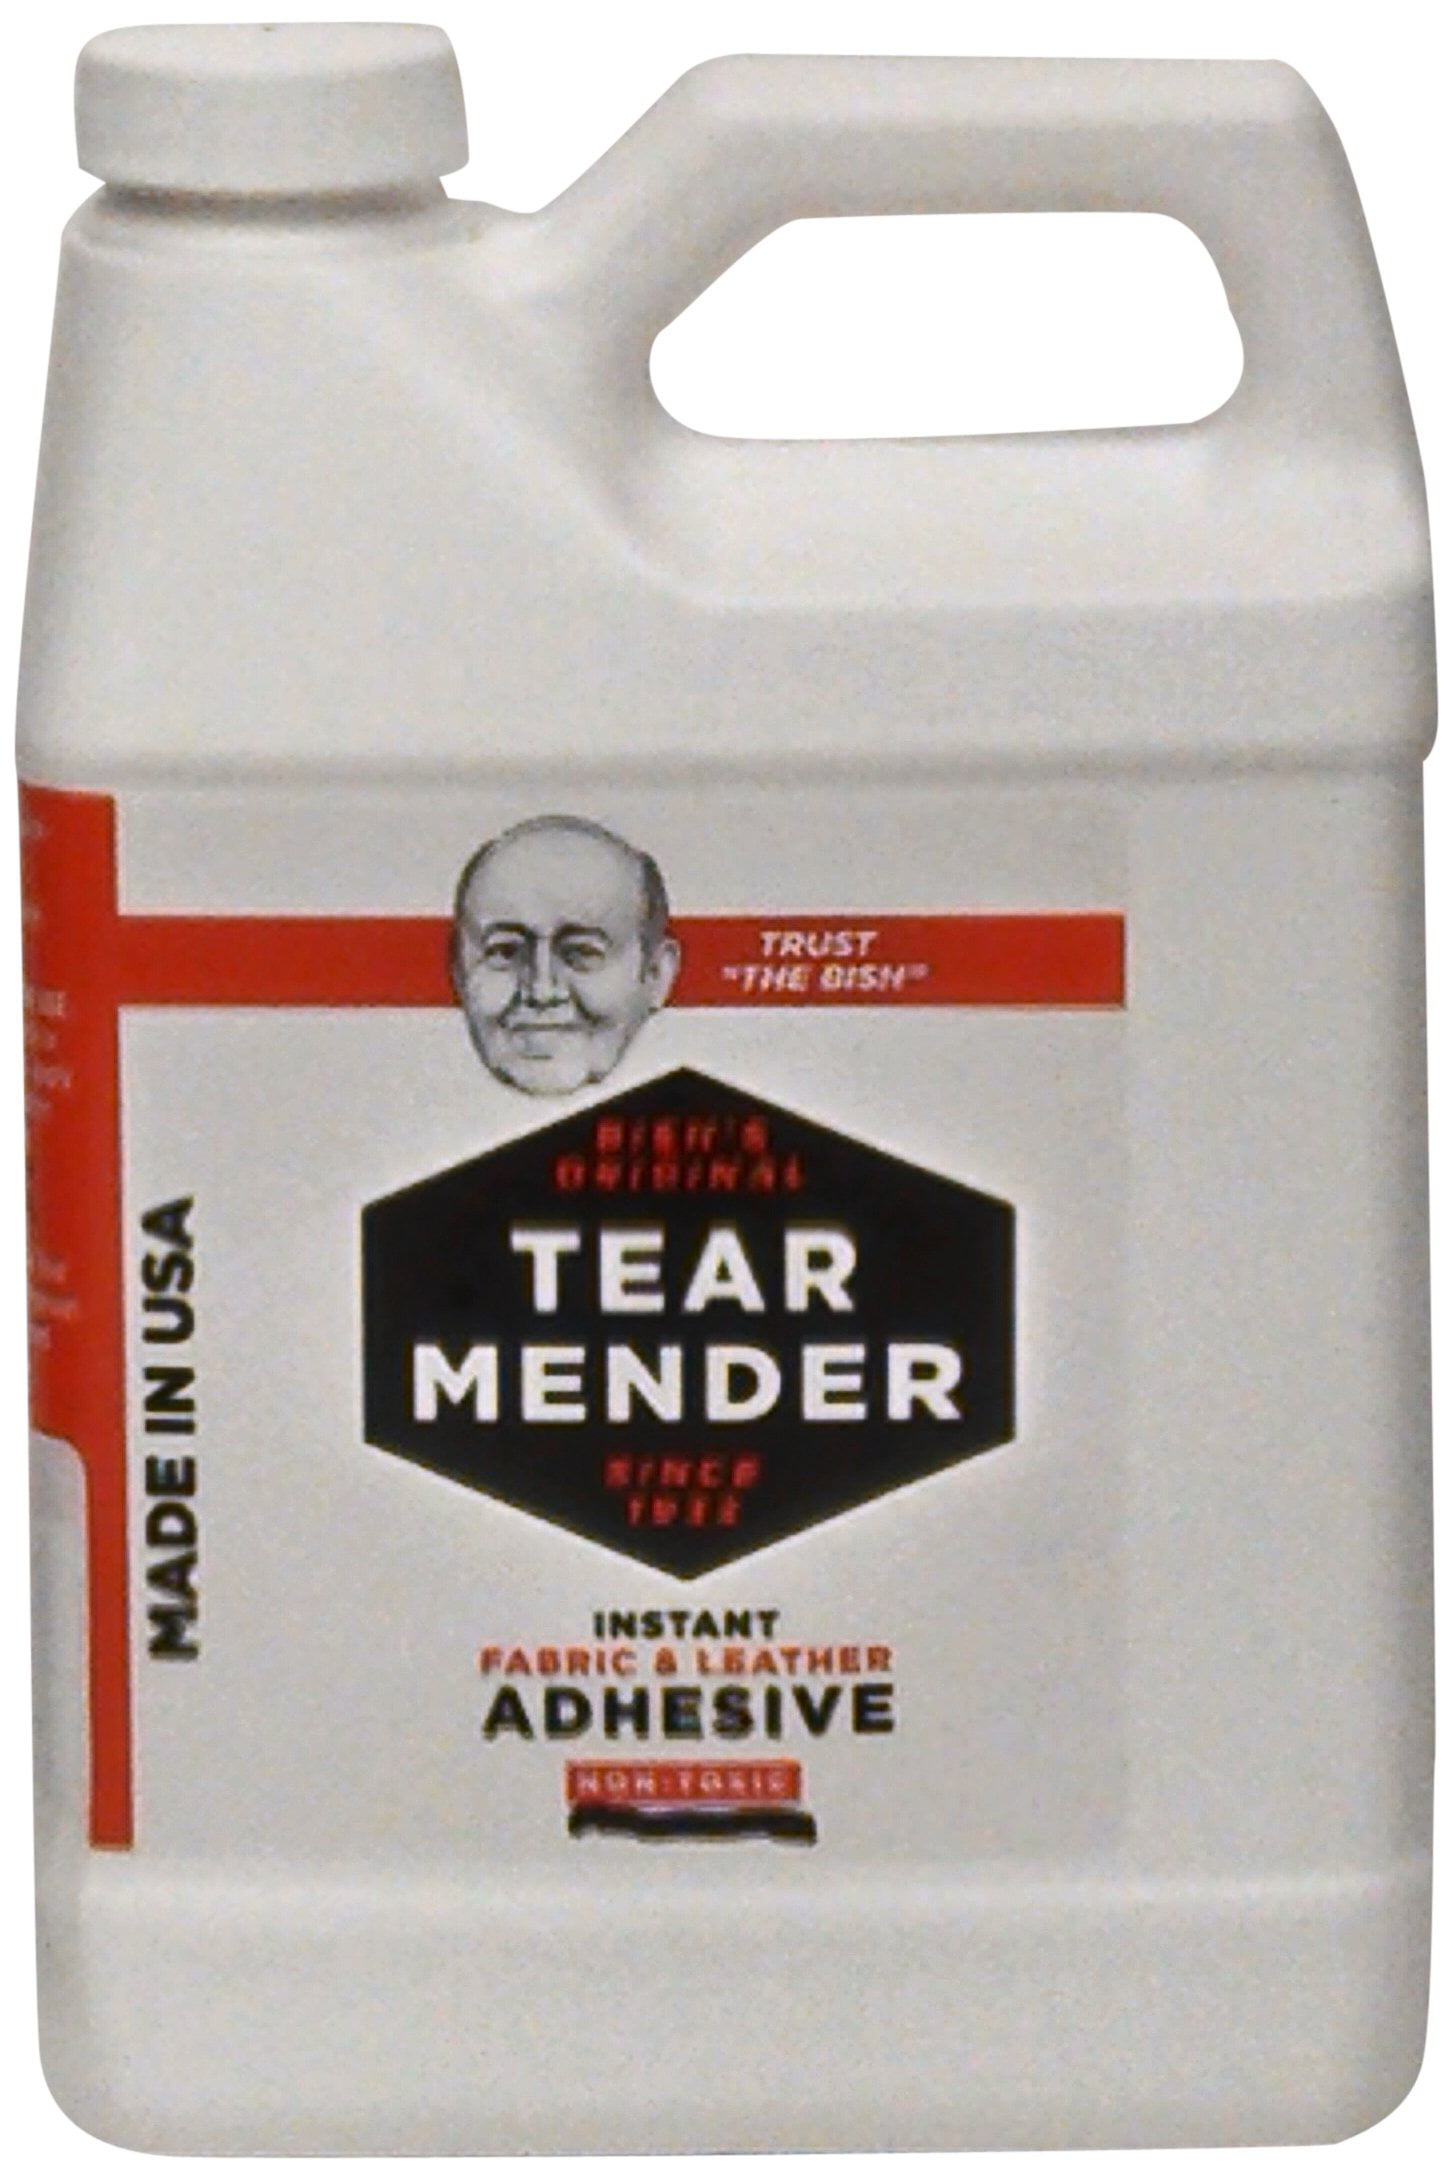 Tear Mender Simple Bond All-Purpose Adhesive, 2 oz Bottle-Carded, SB-1-EA